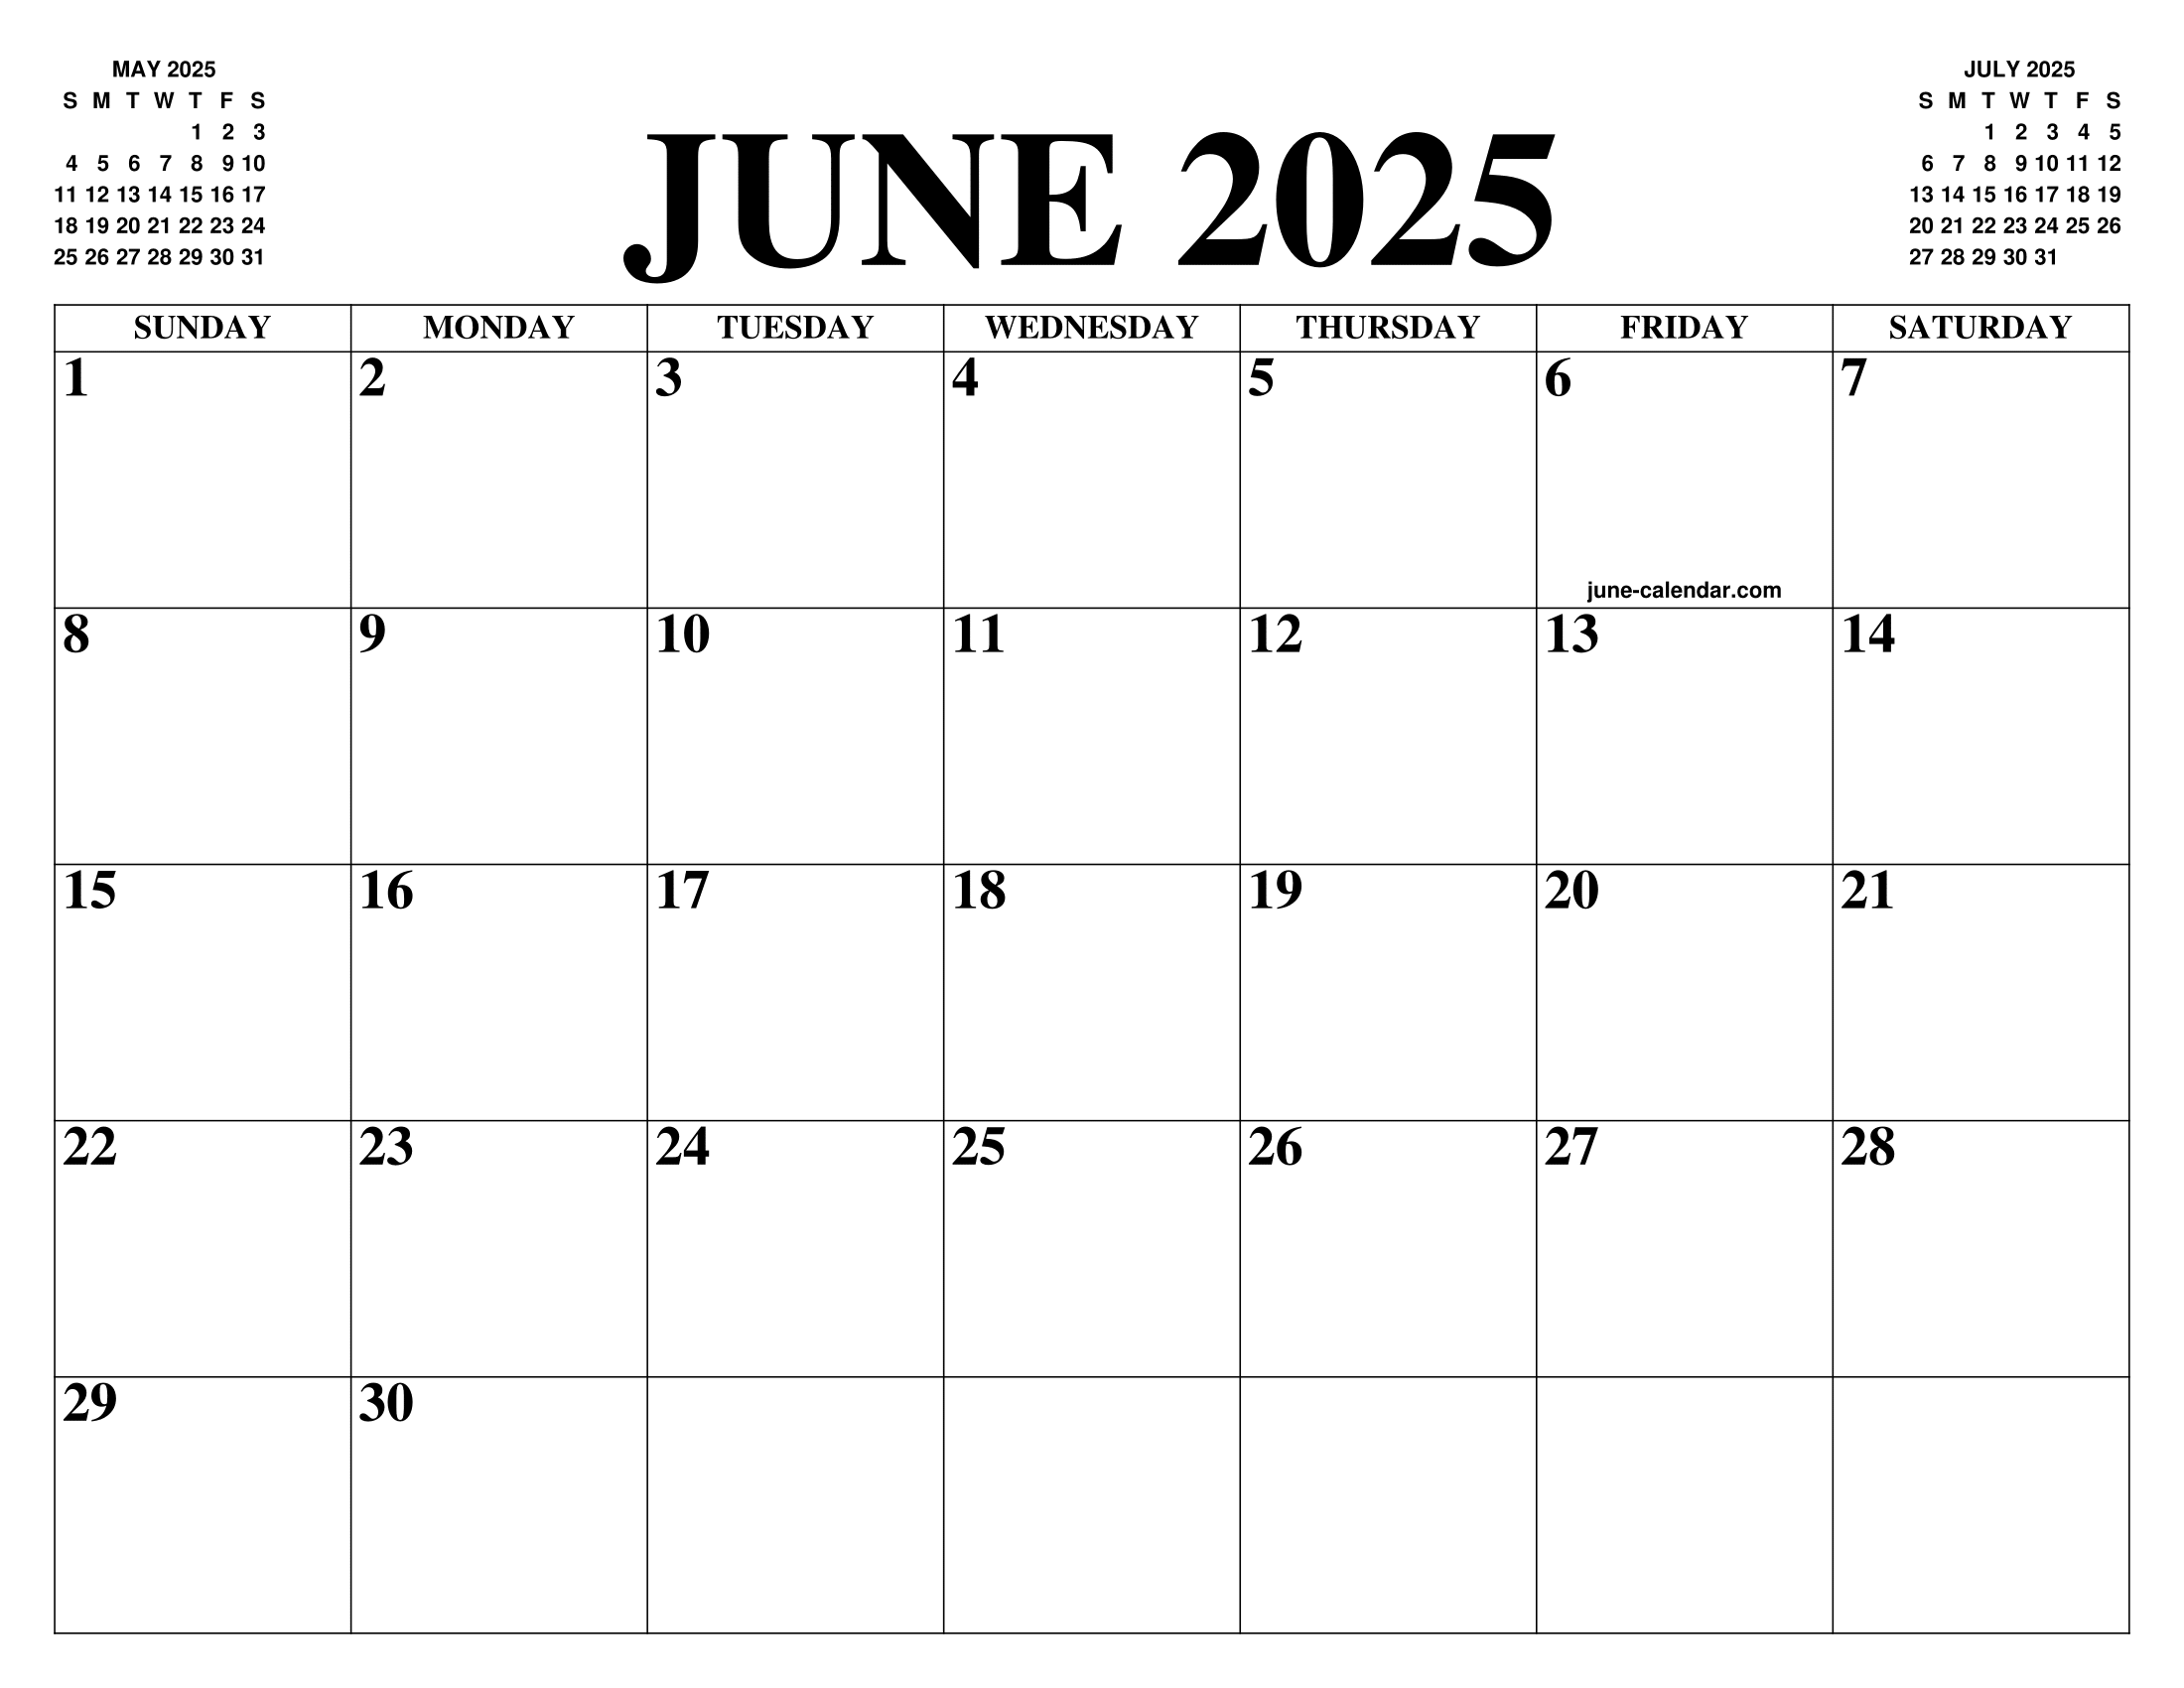 JUNE 2025 CALENDAR OF THE MONTH FREE PRINTABLE JUNE CALENDAR OF THE